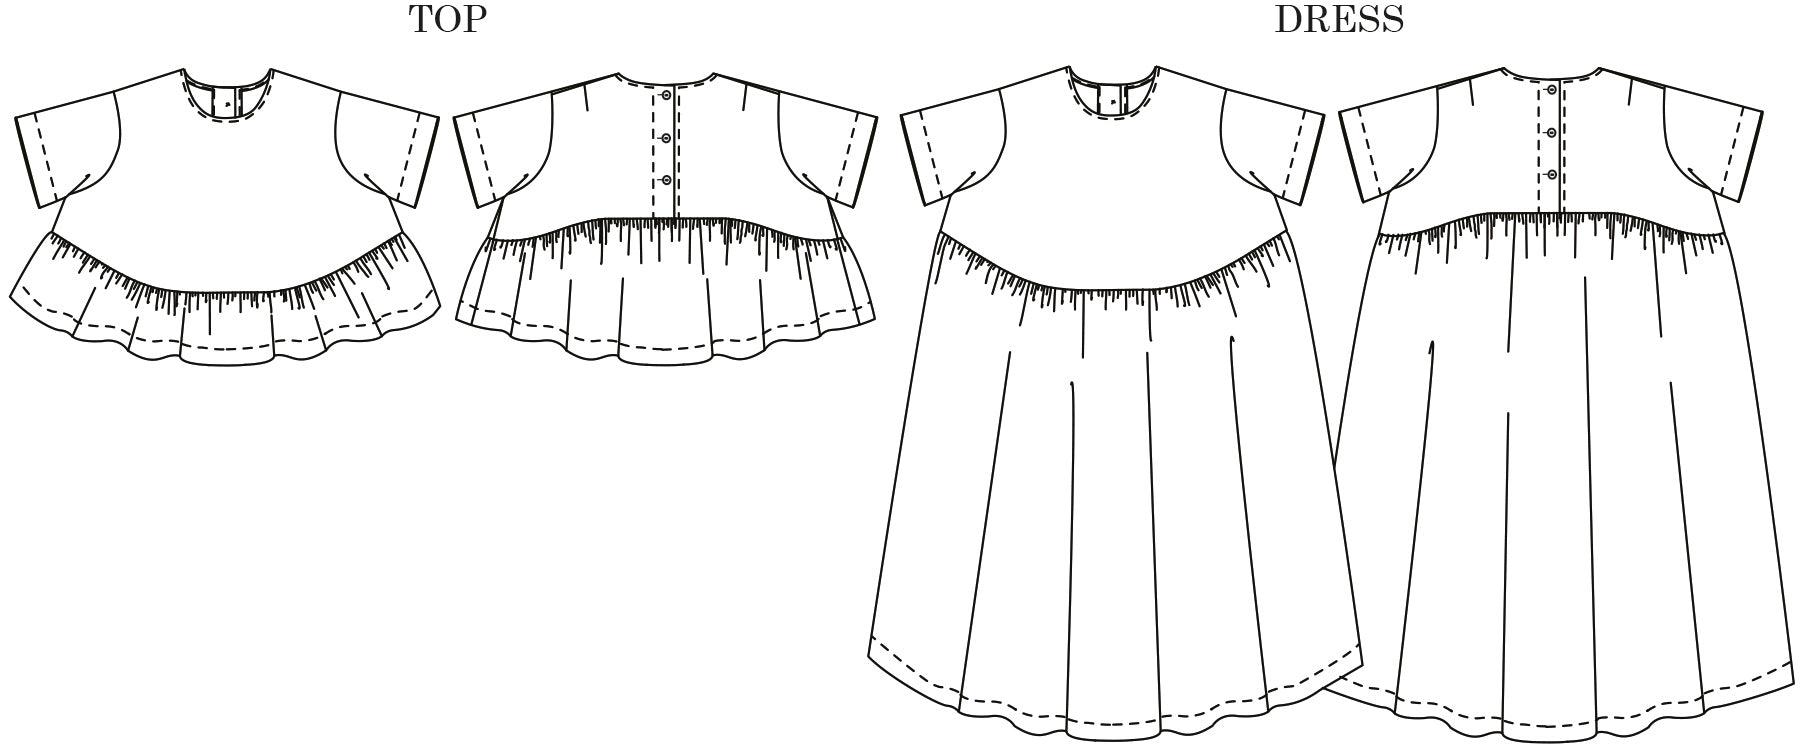 horizontal image, digital drawing, white background, black detail, left side shows, front and back of top, right side shows front and back of dress.